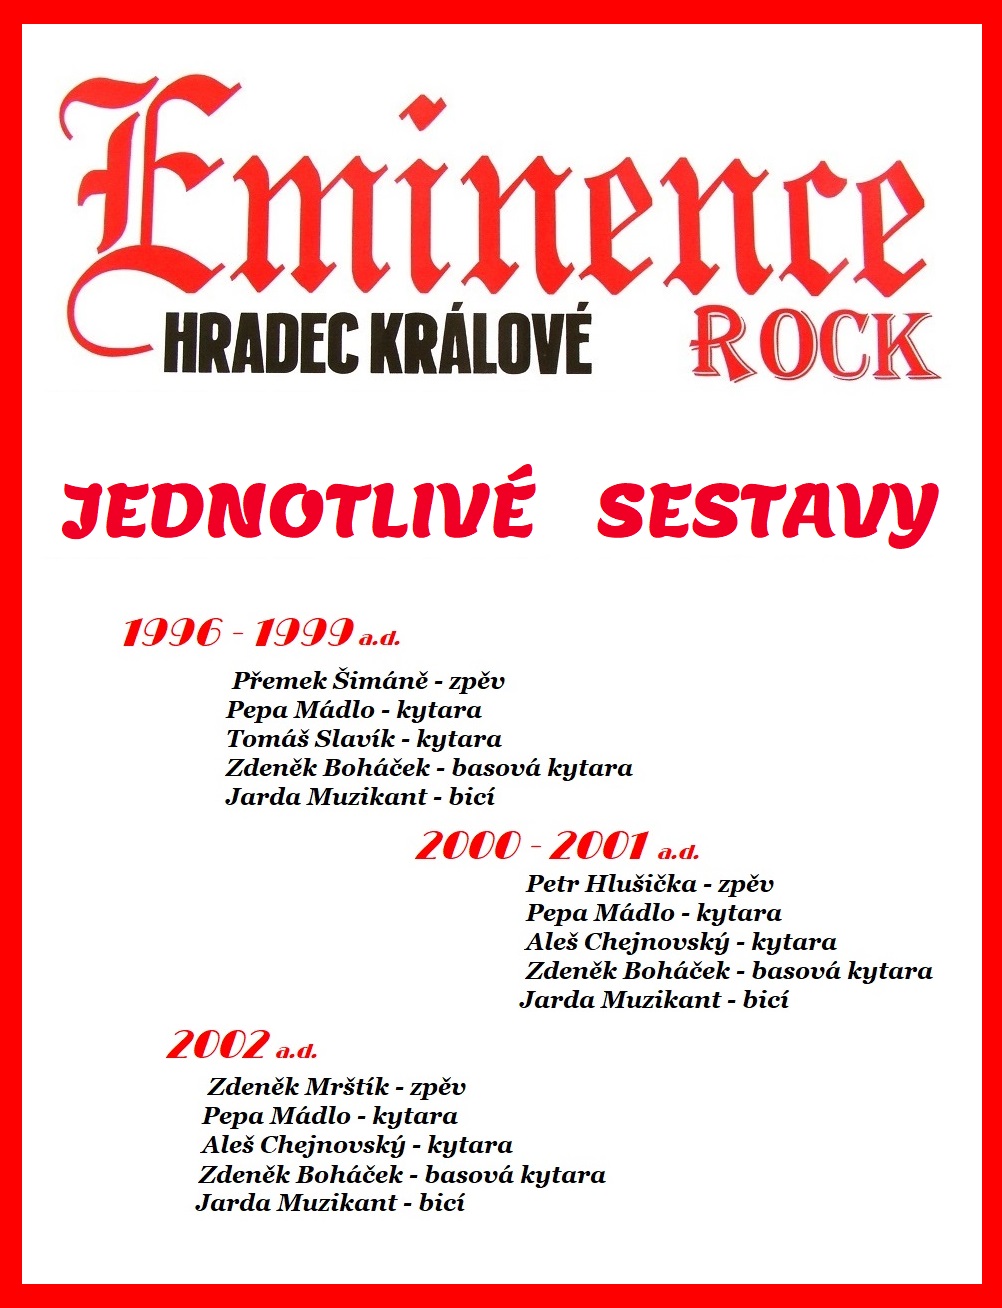 em9.1996 - 1999 EMINENCE - plakat - kopie